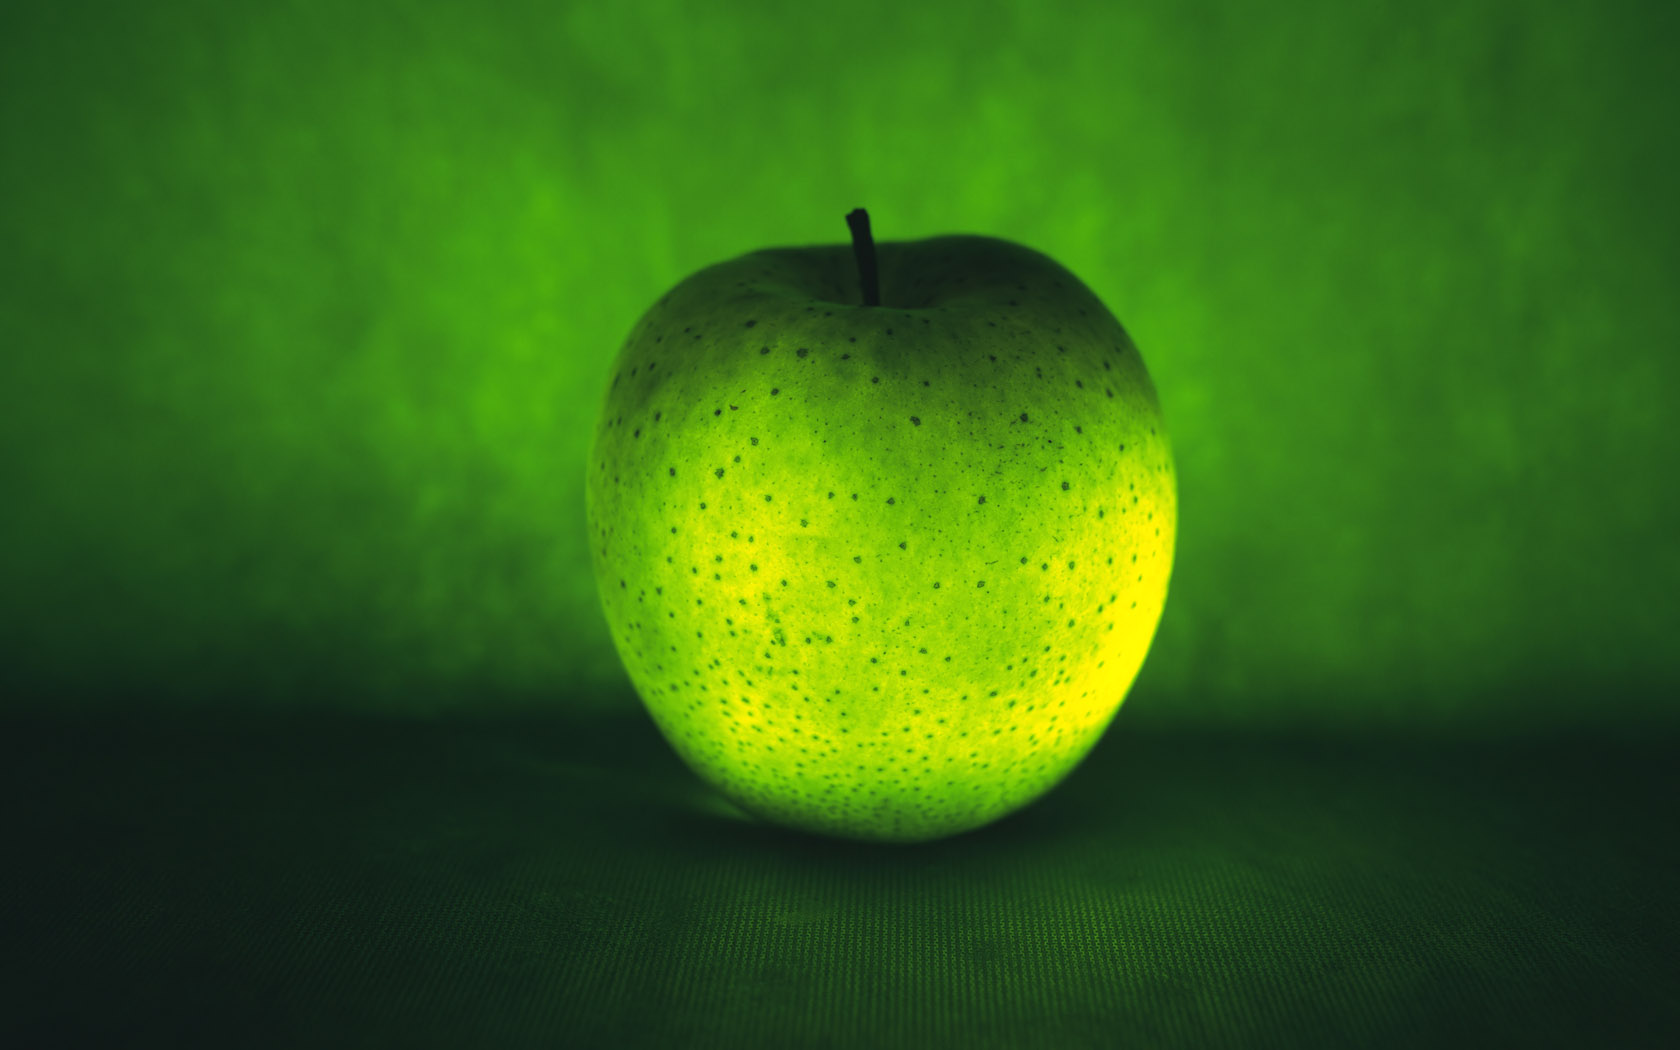 Green Apple Wallpaper Images - Free Download on Freepik